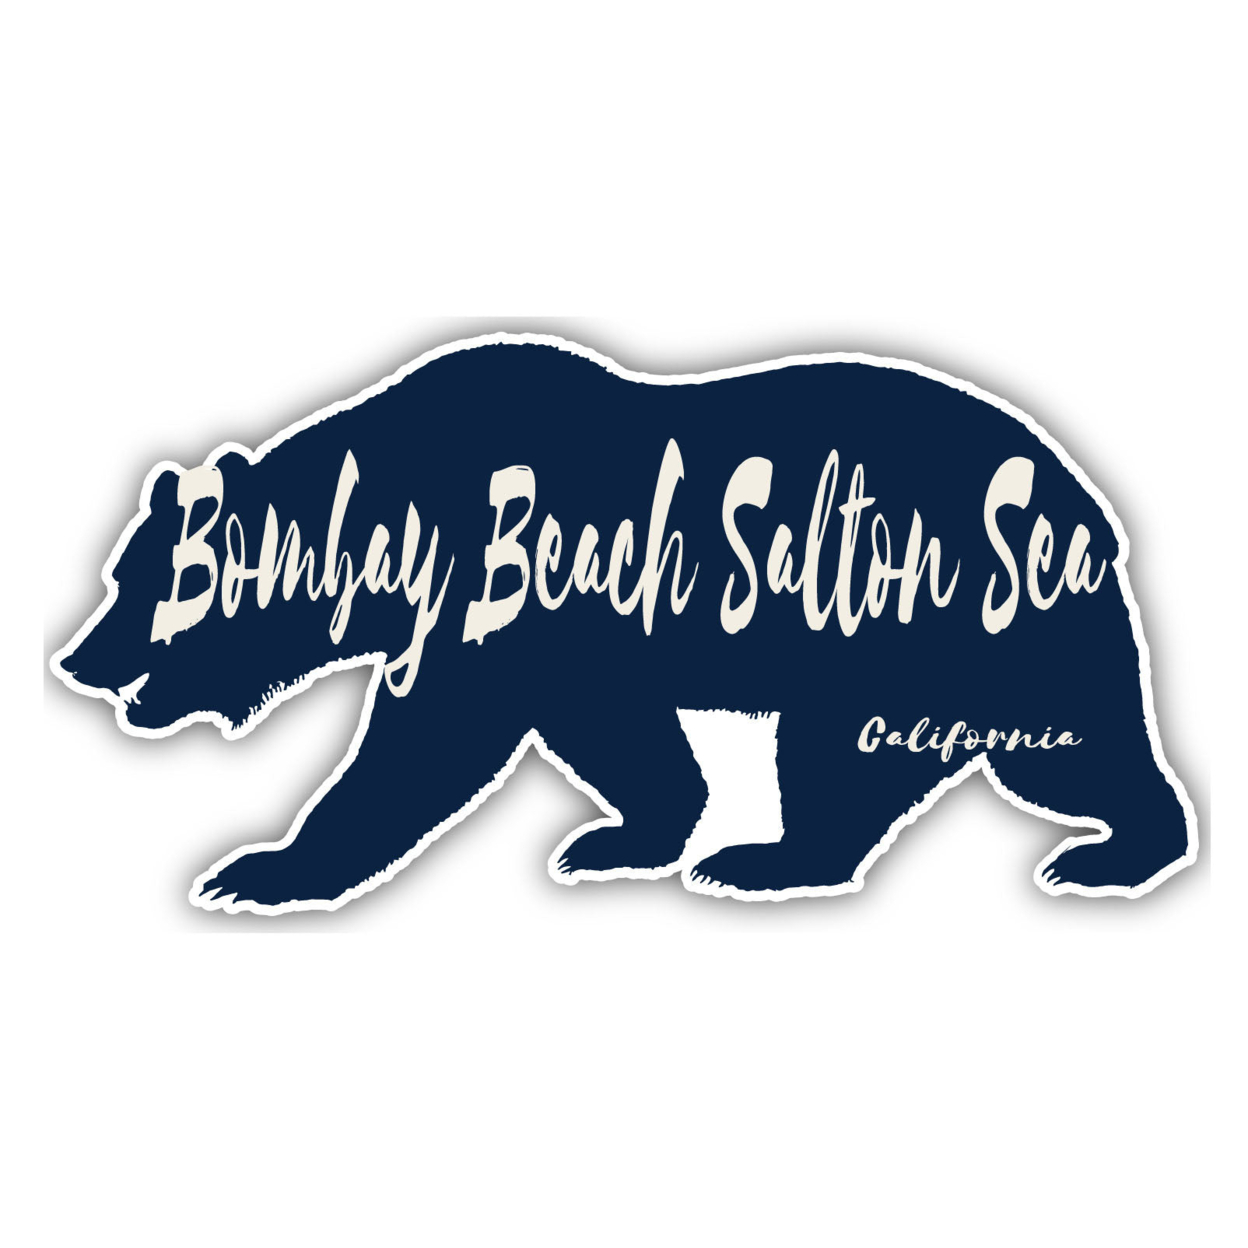 Bombay Beach Salton Sea California Souvenir Decorative Stickers (Choose Theme And Size) - 4-Pack, 4-Inch, Bear